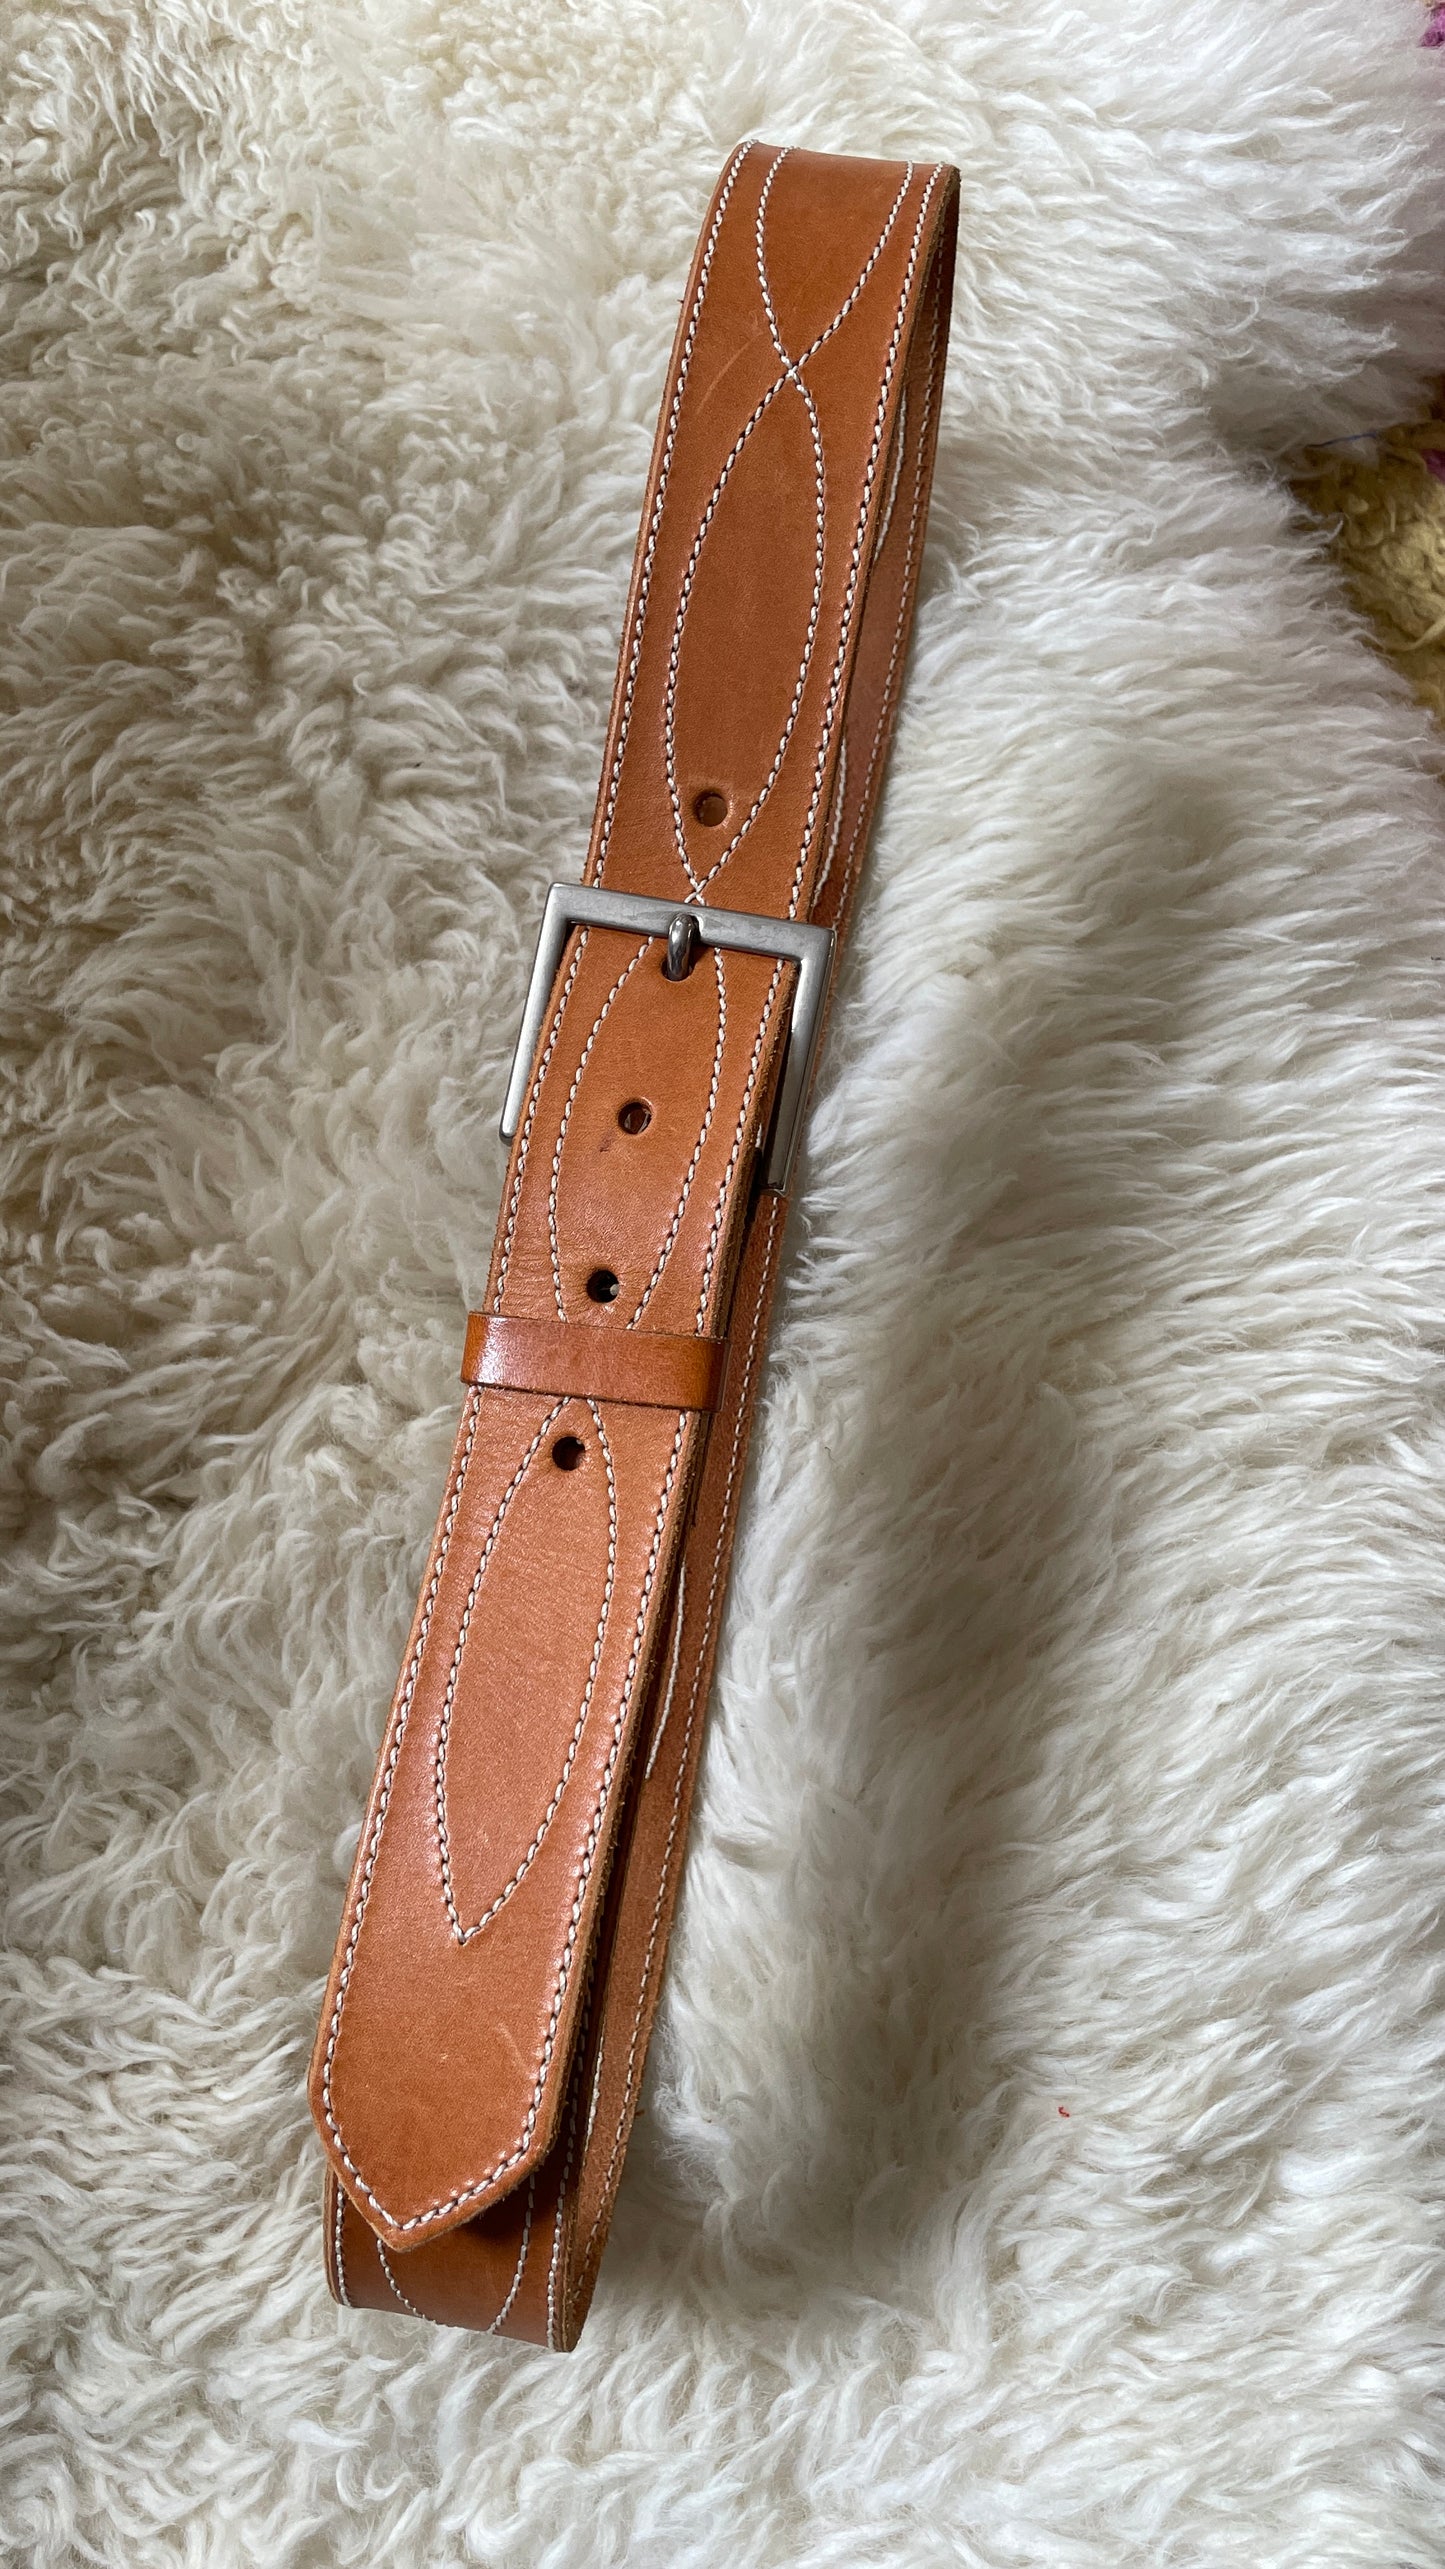 Leather stitched belt